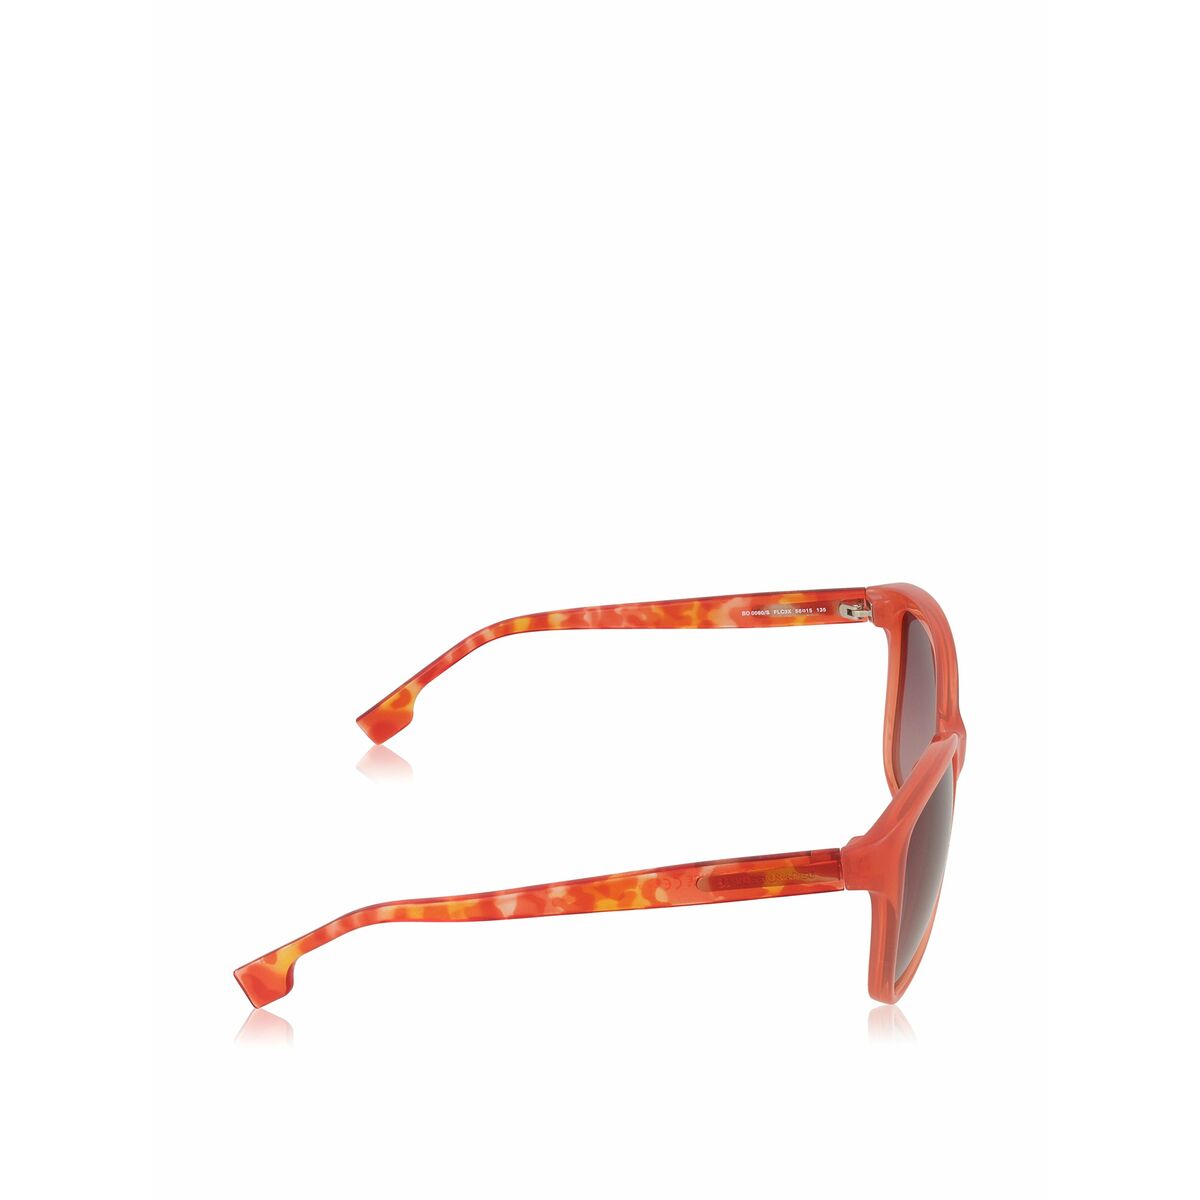 Kaufe Damensonnenbrille Hugo Boss BOSS ORANGE 0060_S bei AWK Flagship um € 142.00